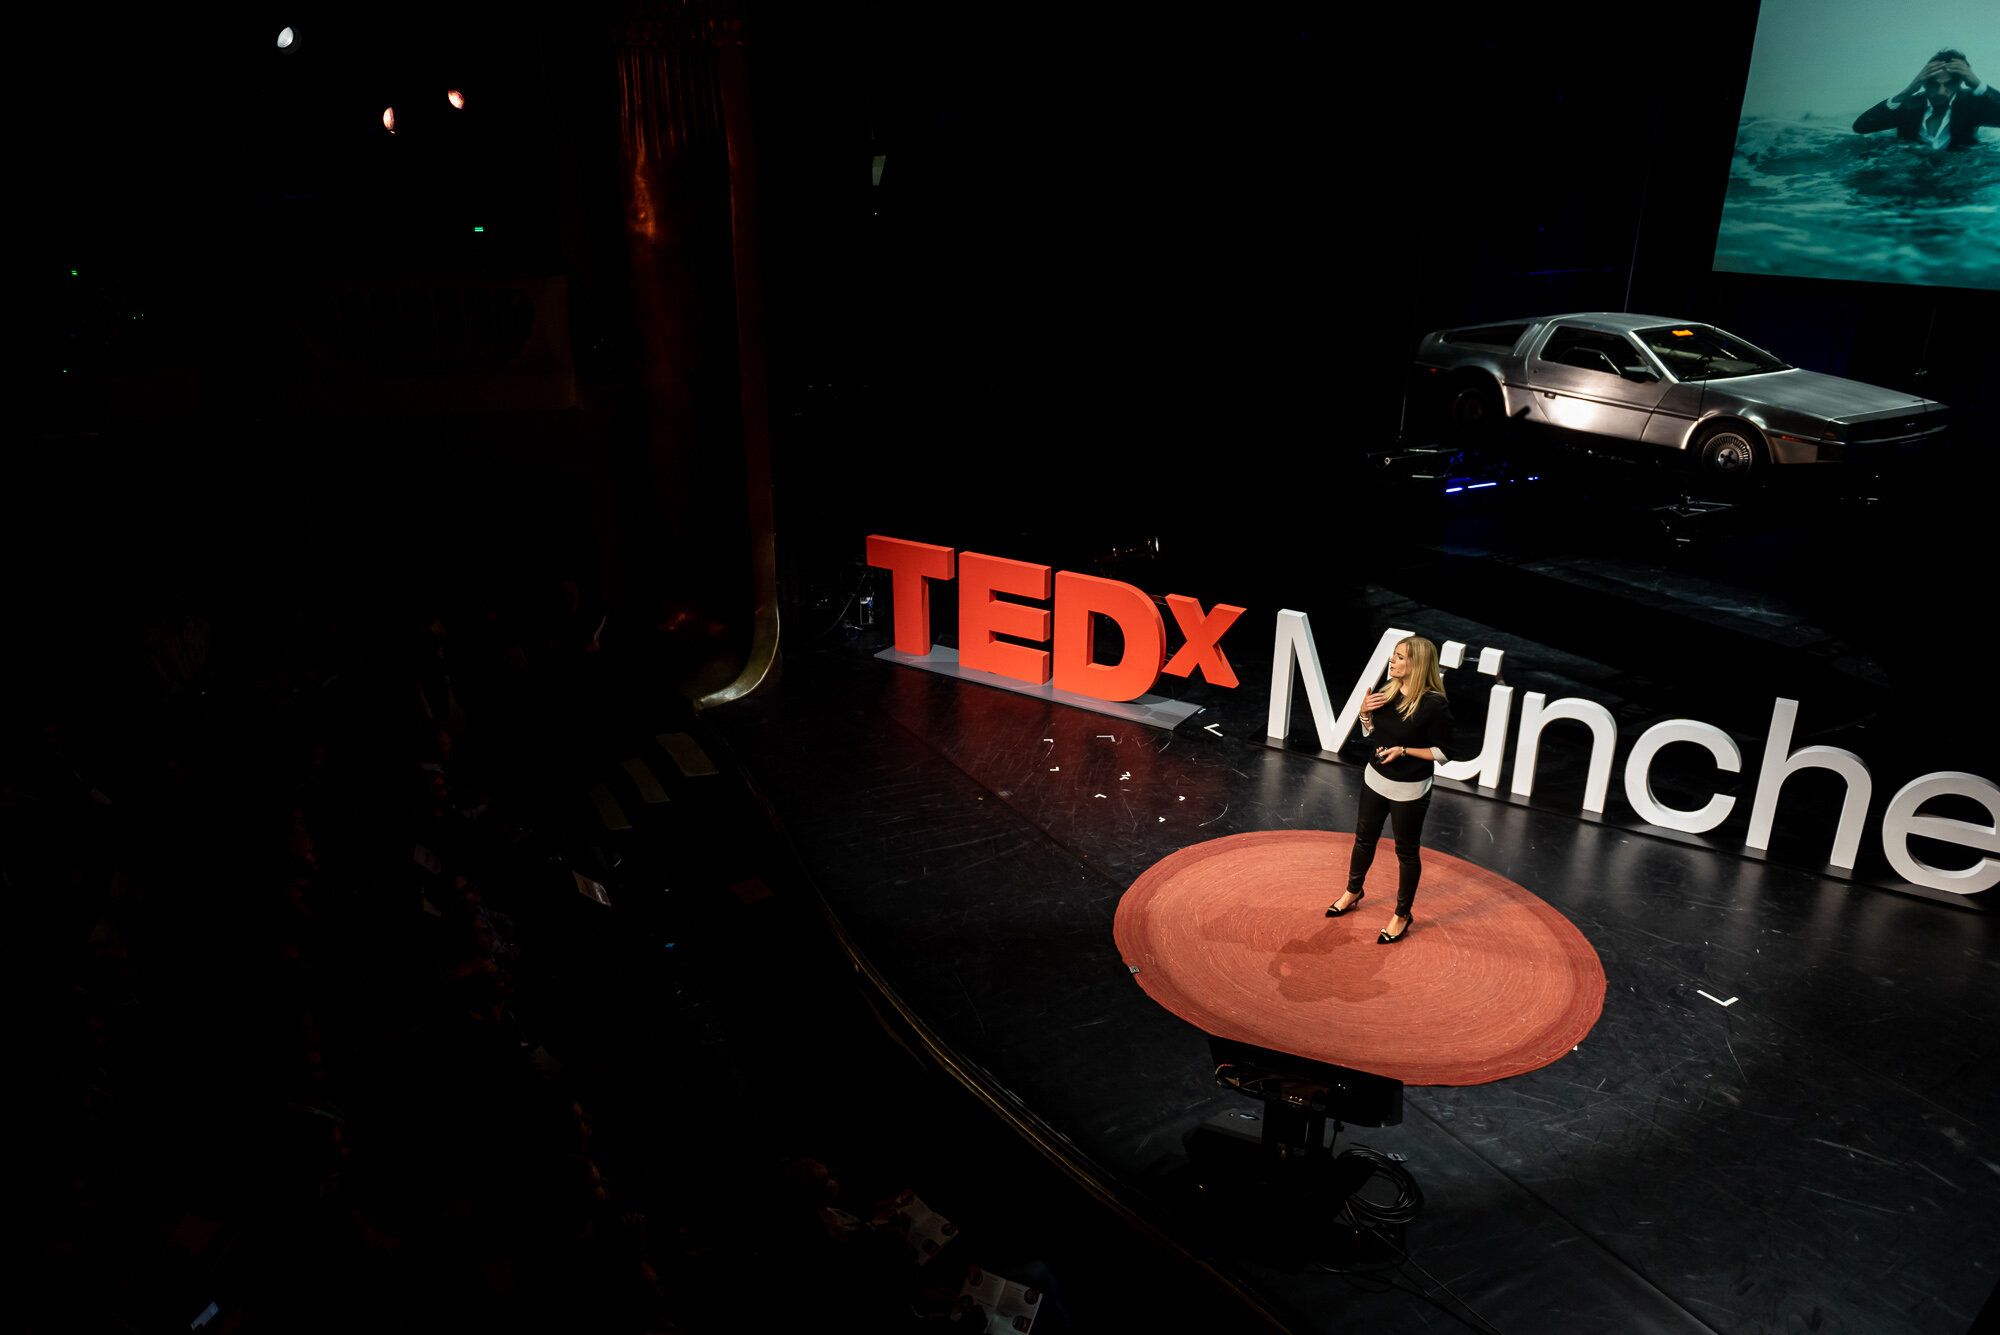 TEDX_2019-191110-018.jpg